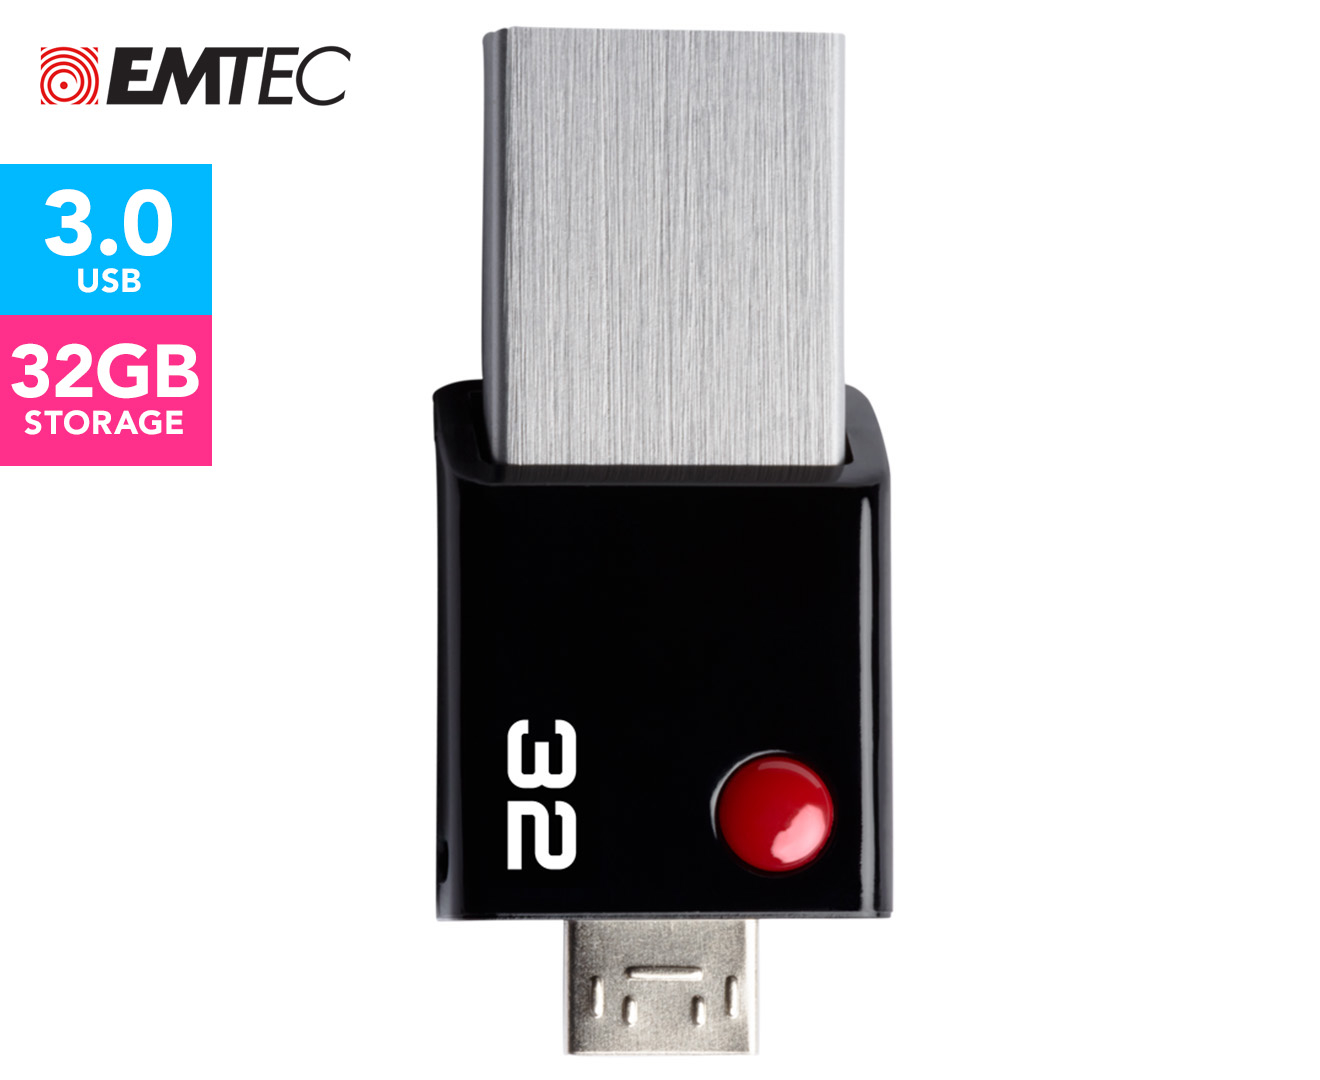 EMTEC Mobile & Go USB 3.0 2-in-1 32GB Flash Drive - Black/Steel